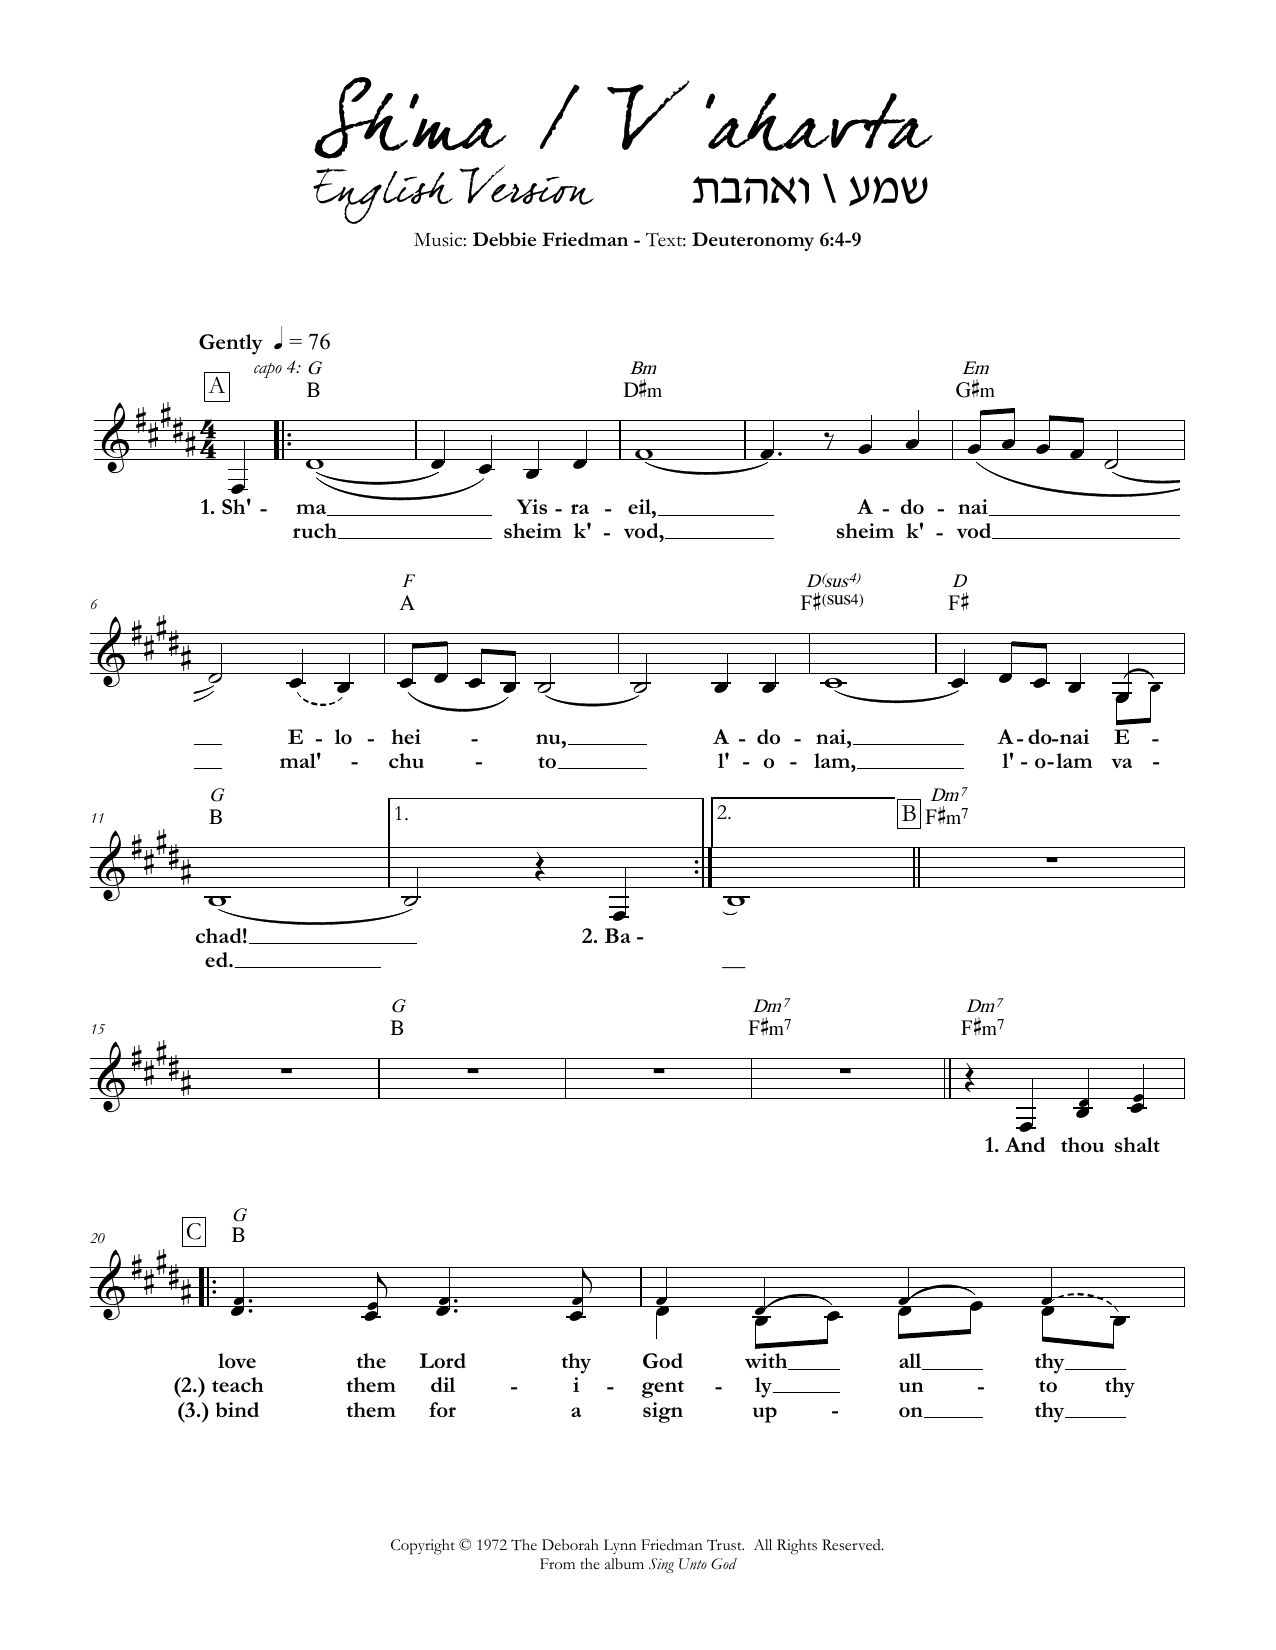 Debbie Friedman Sh'ma/V'ahavta (English version) Sheet Music Notes & Chords for Lead Sheet / Fake Book - Download or Print PDF